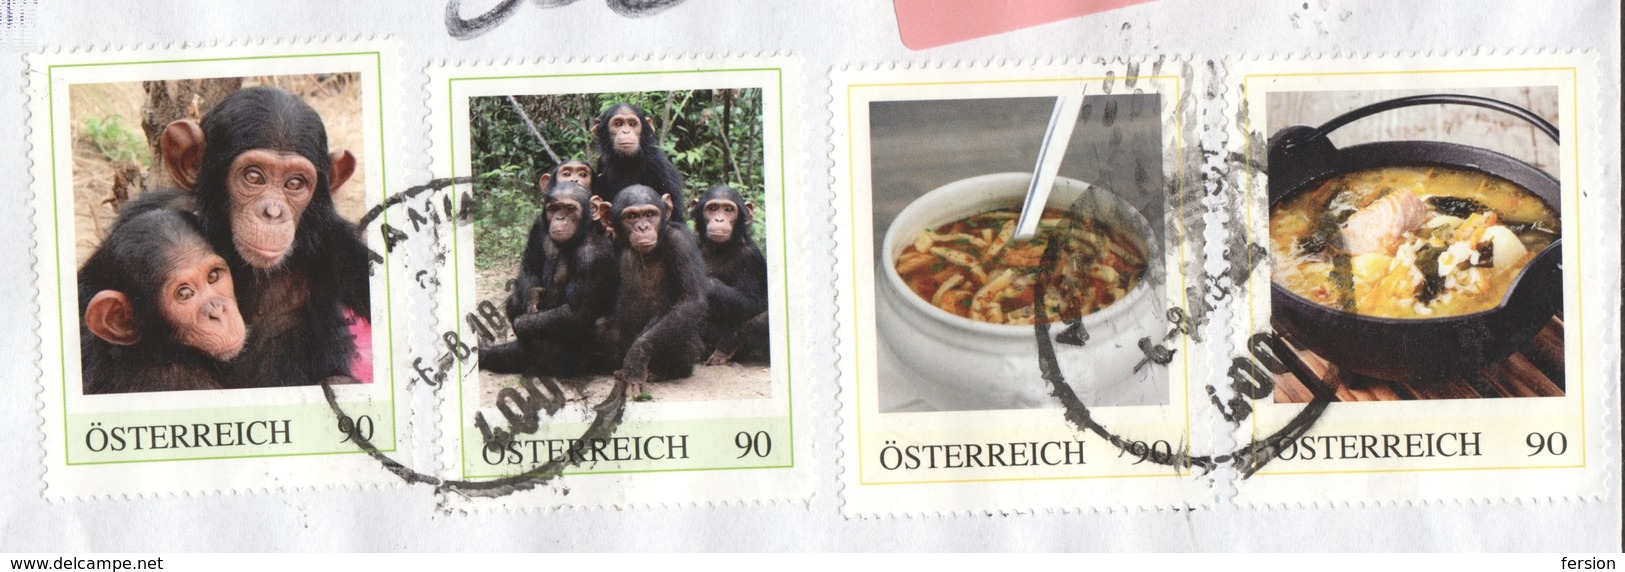 Monkey Chimpanzee / Austria St. Martin - Personal Stamp / Food Soup / Registered Priority Label Vignette Mail Cover - Chimpanzés